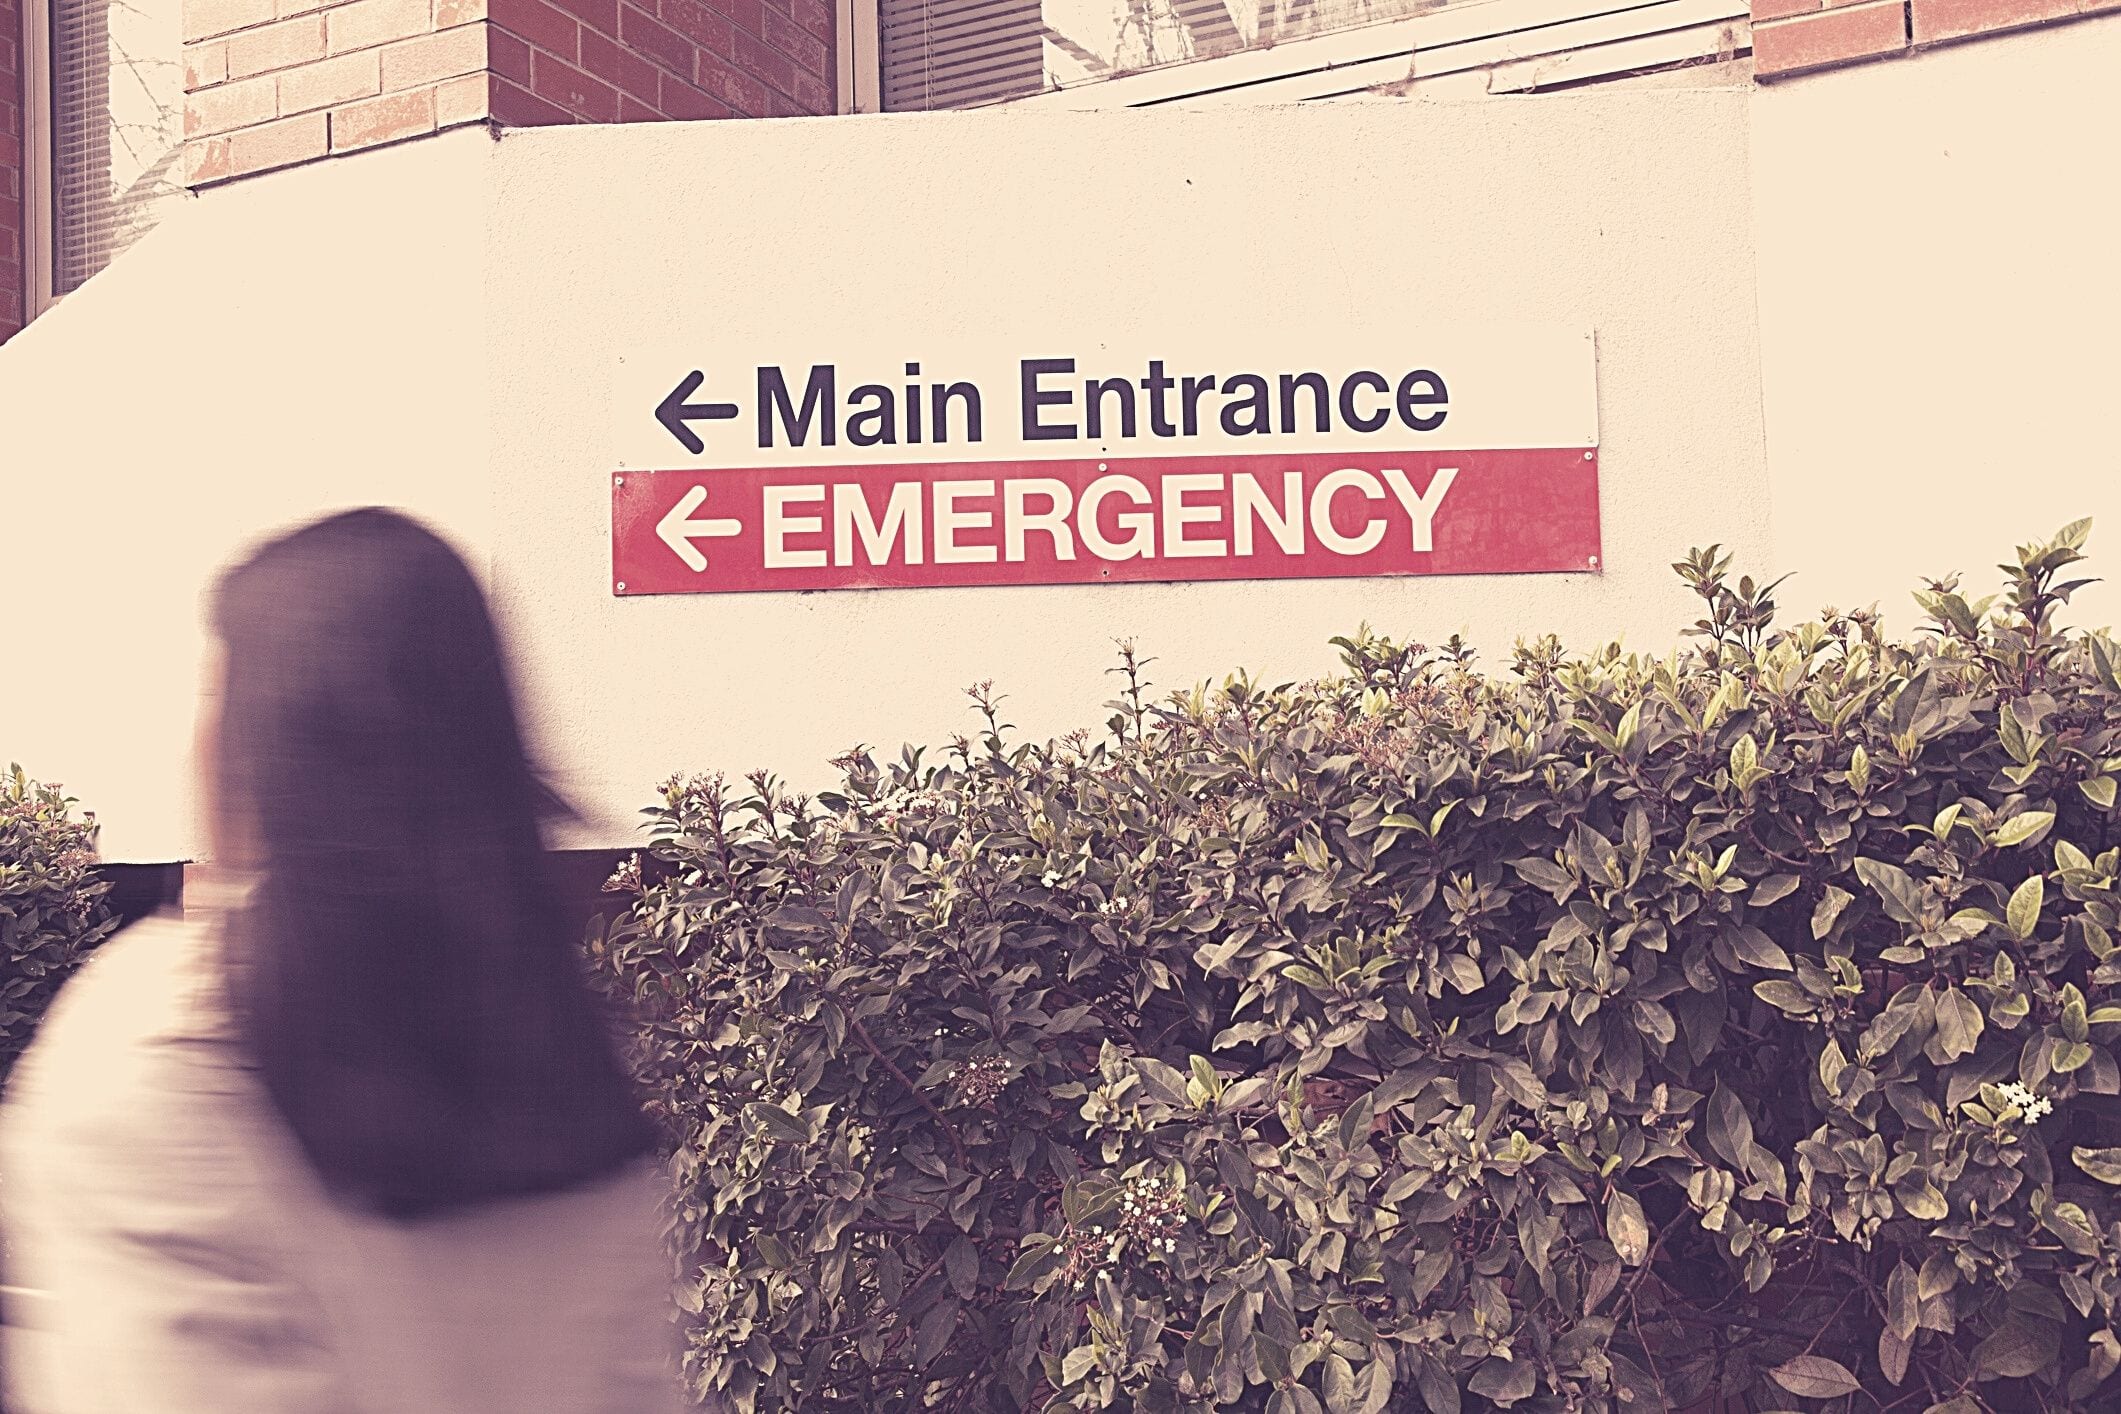 Emergency hospital